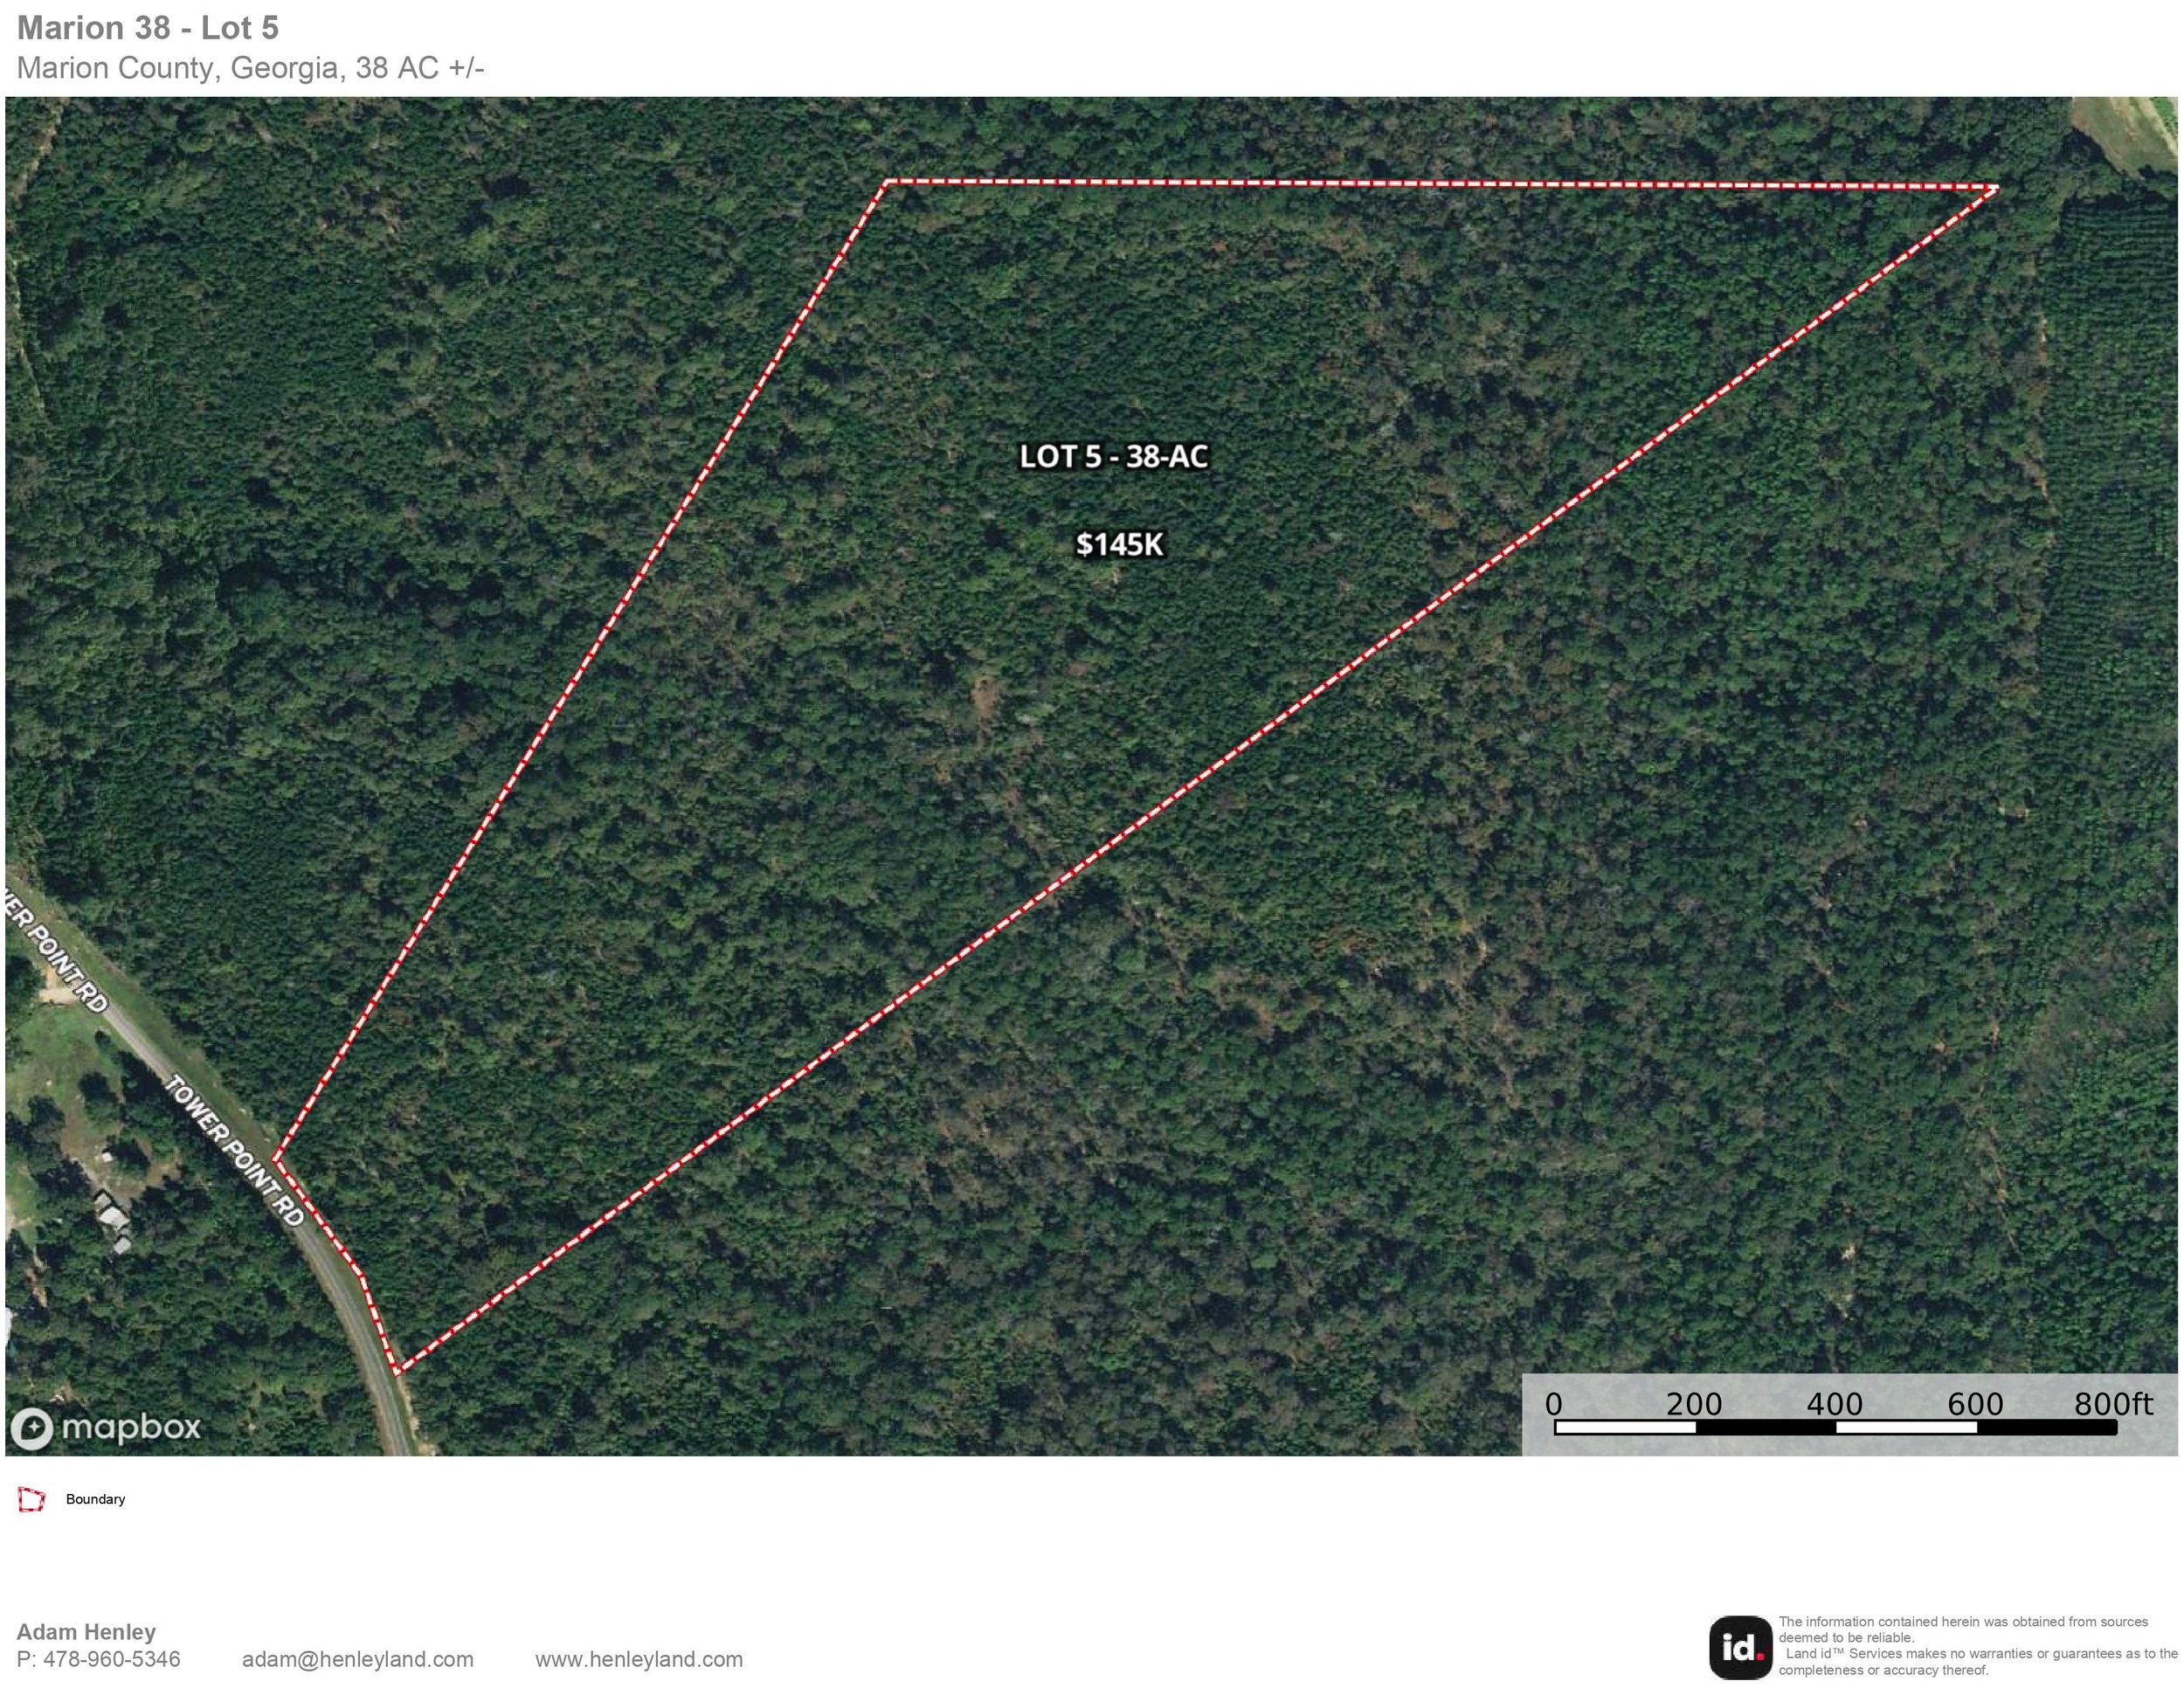 Marion 38 Aerial Map.jpg